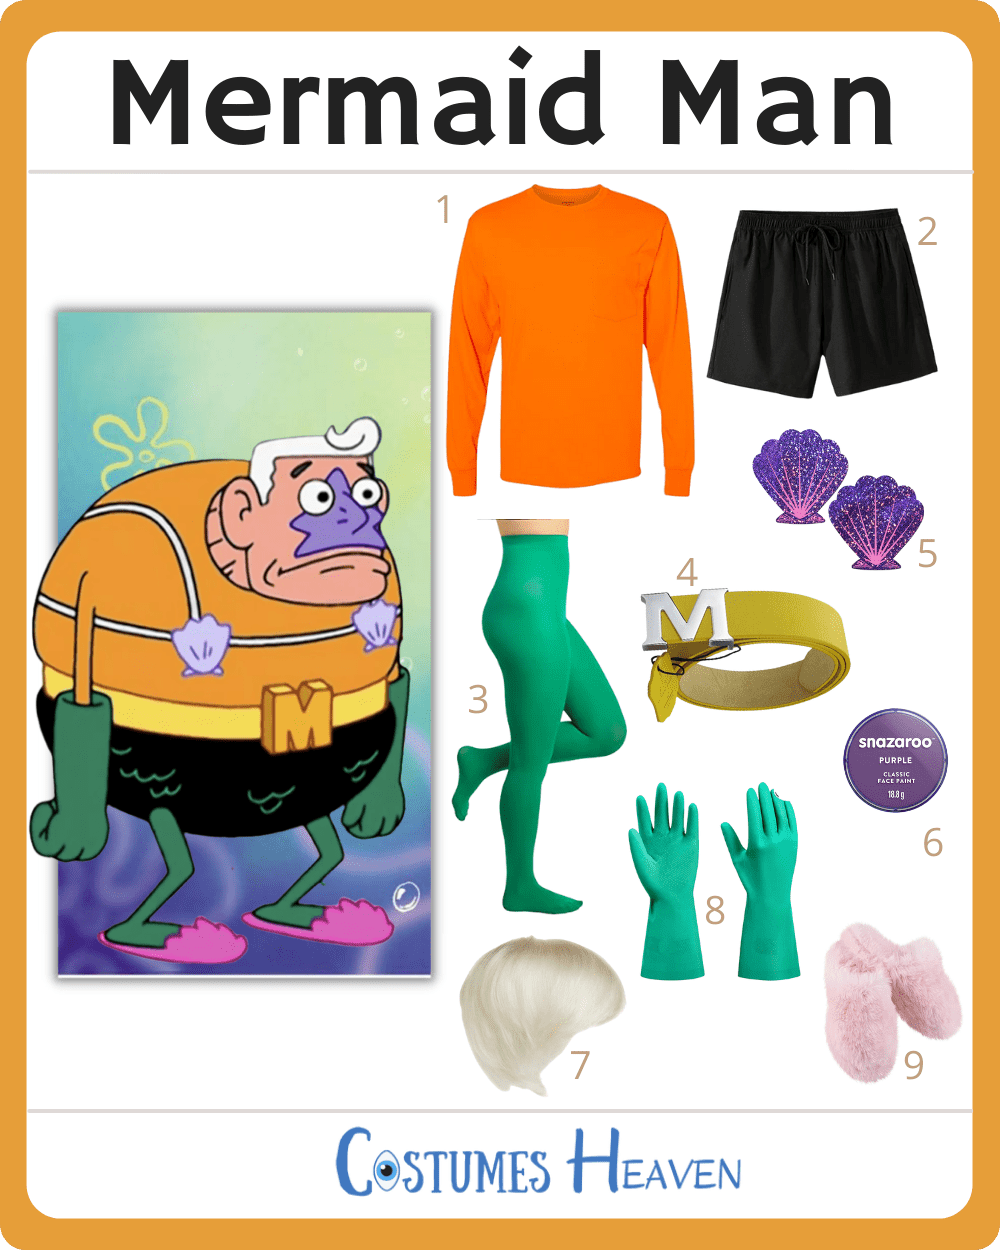 mermaid man costume